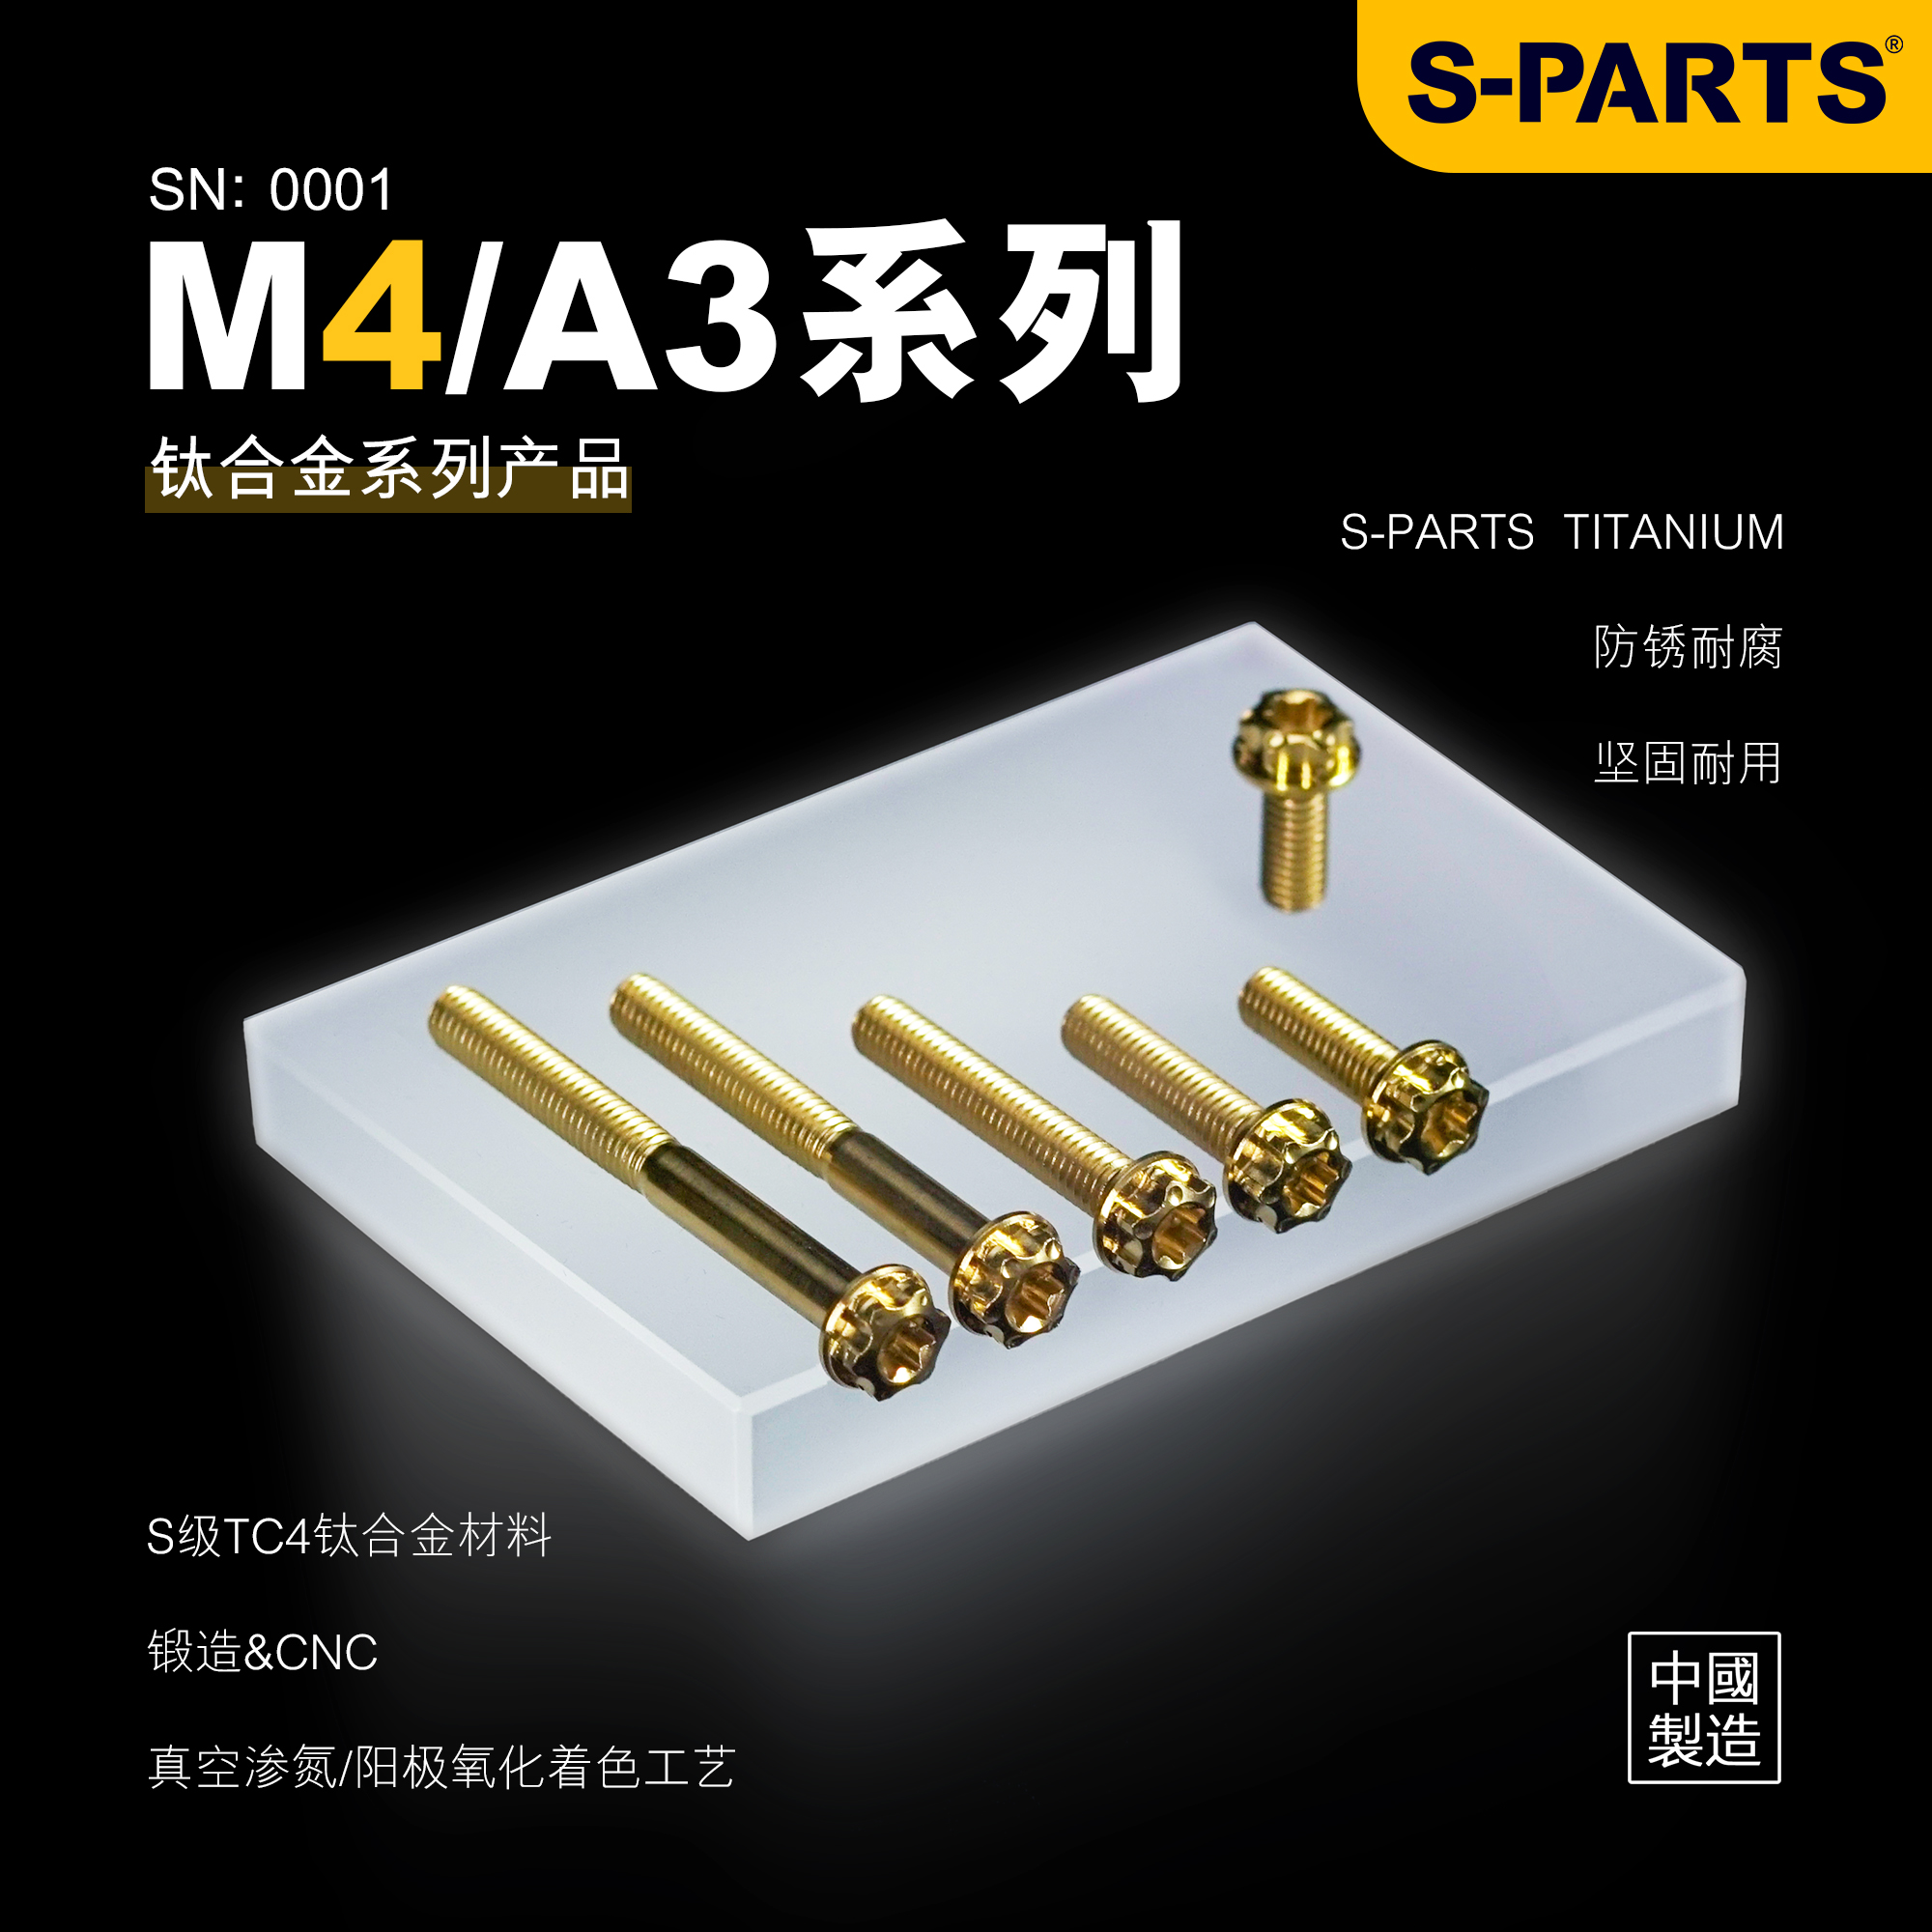 SPARTS斯坦 A3系列 M4 标准头 钛合金螺丝金蓝锁紧电车摩托车螺钉